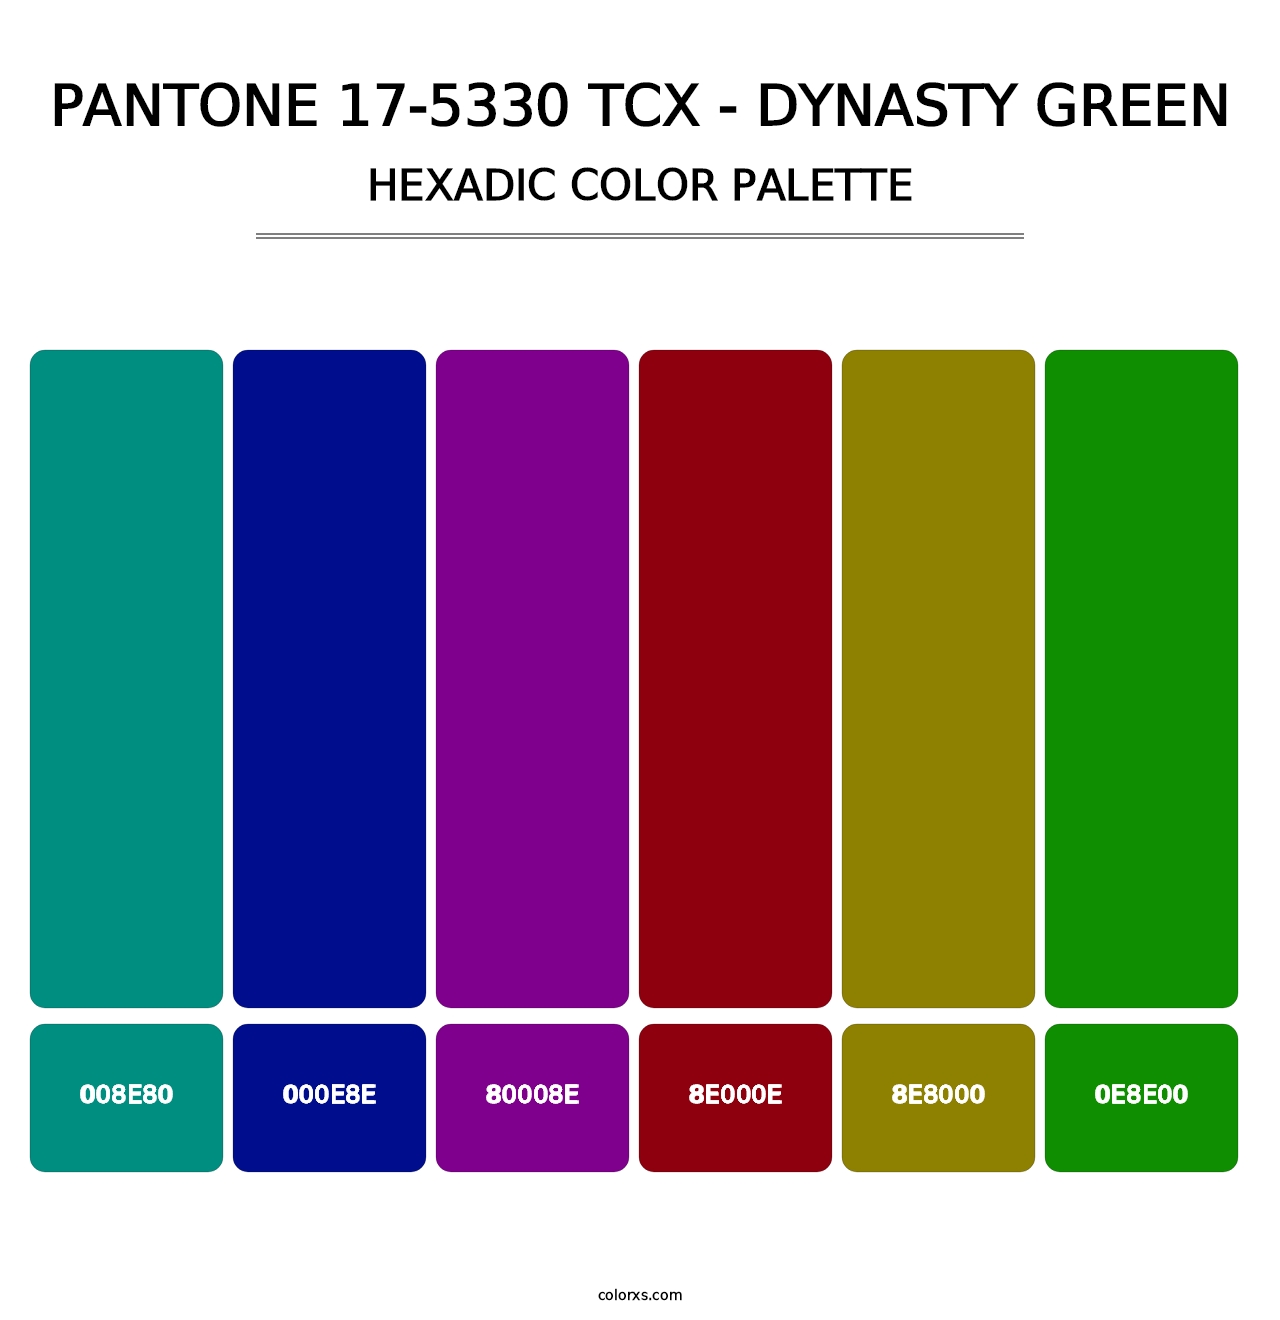 PANTONE 17-5330 TCX - Dynasty Green - Hexadic Color Palette